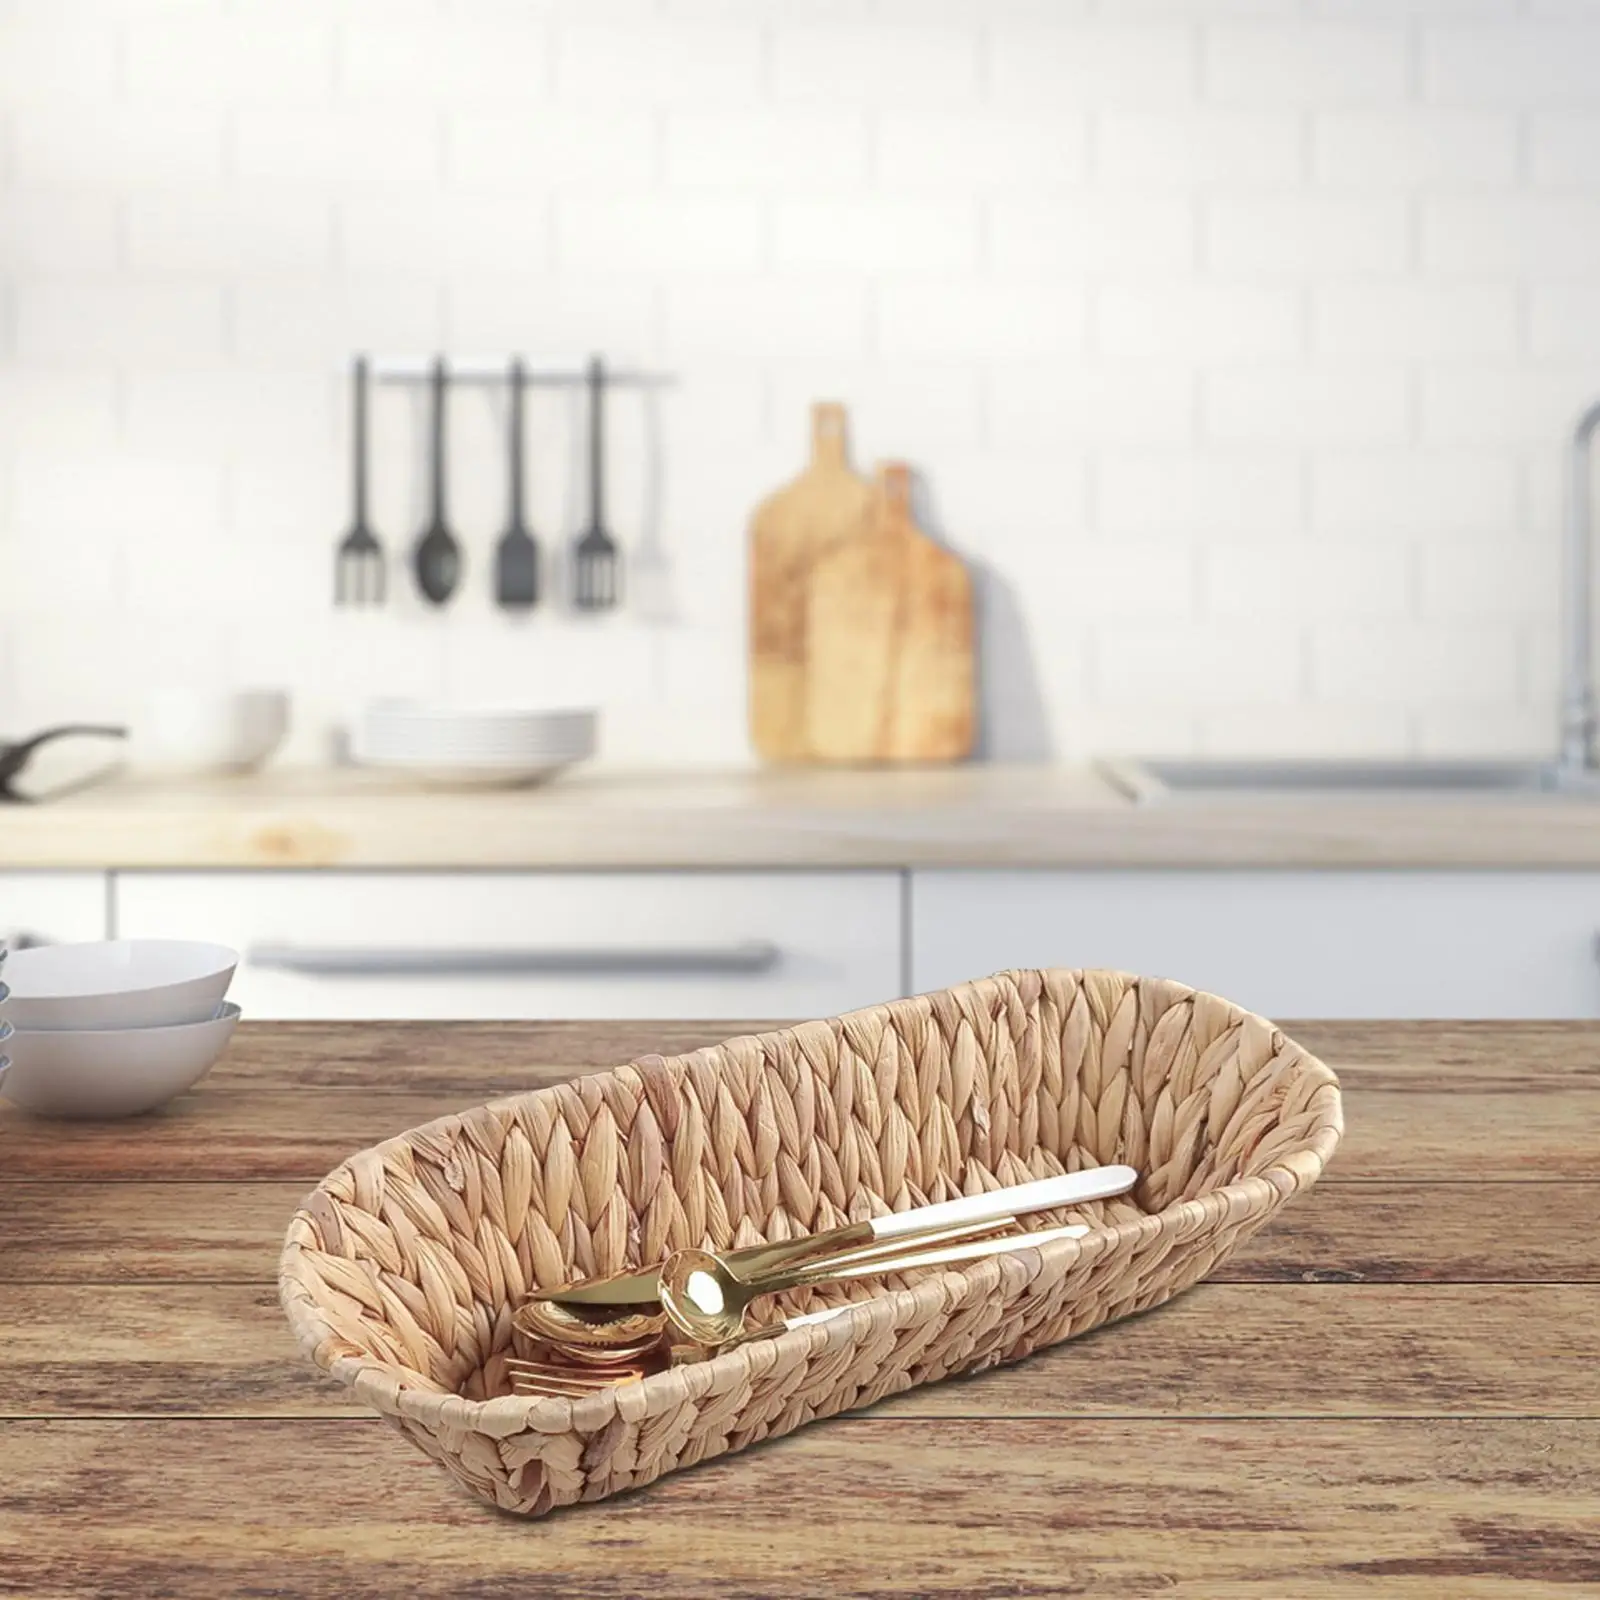 Handwoven Grass Rattan Bread Basket Serving Organizer Multipurpose 12.6x5x2.8inch for Kitchen Counter Lightweight Sturdy